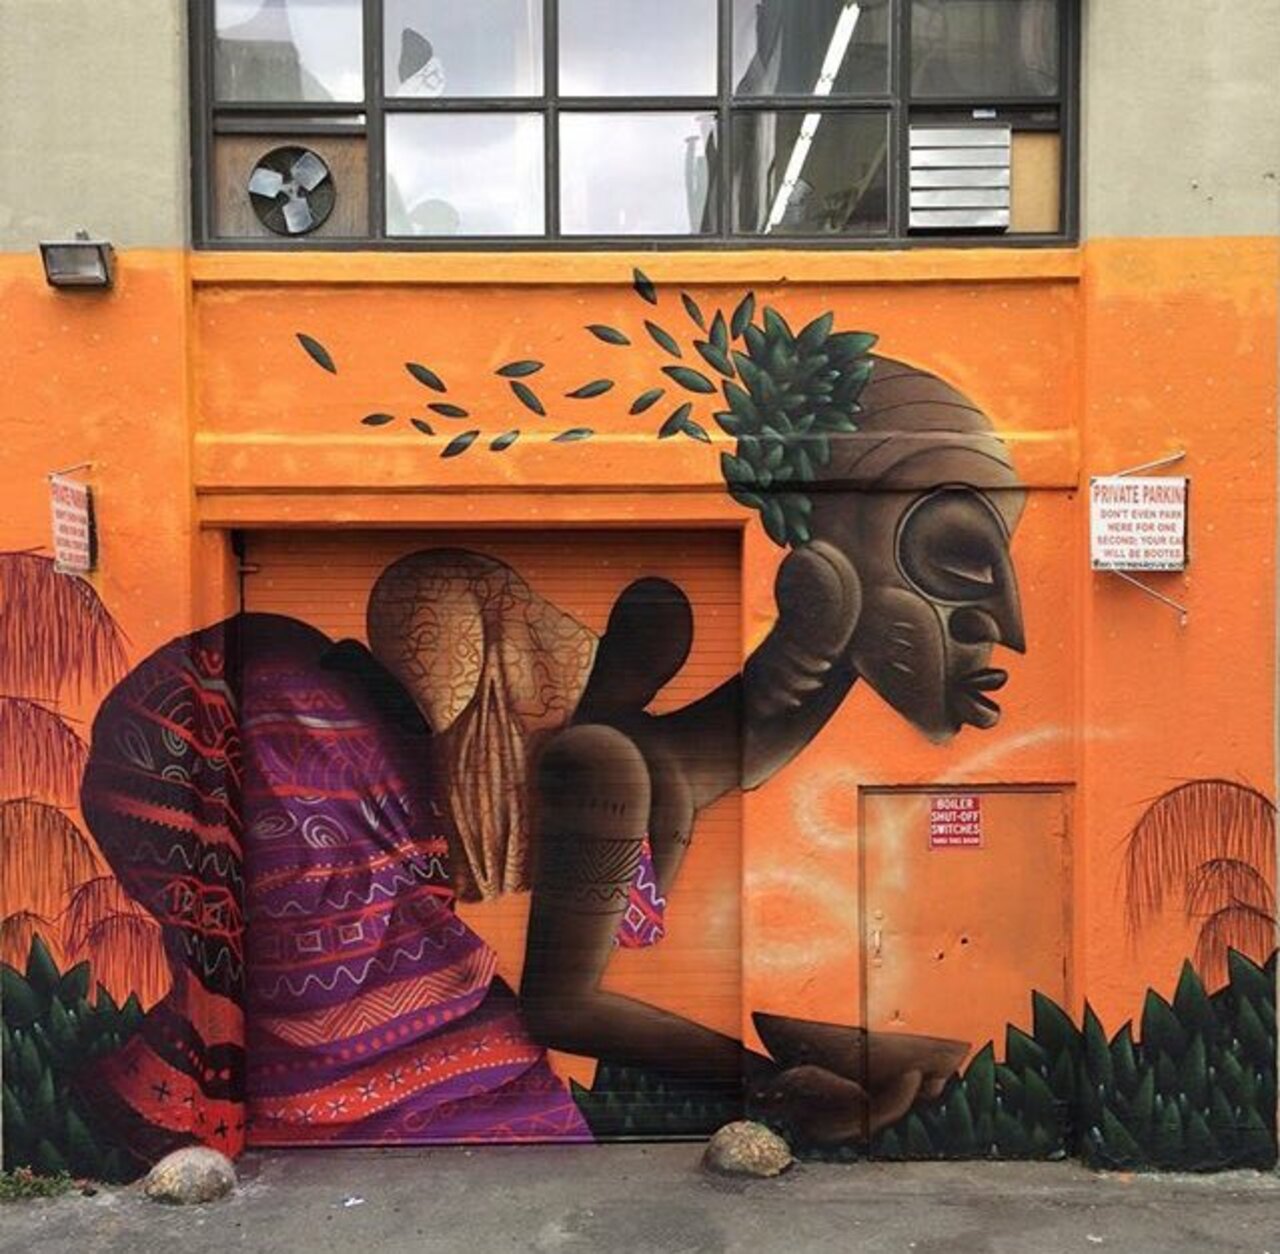 New Street Art by Alexandre Keto in NYC 

#art #graffiti #mural #streetart https://t.co/wEpkTM5nMM